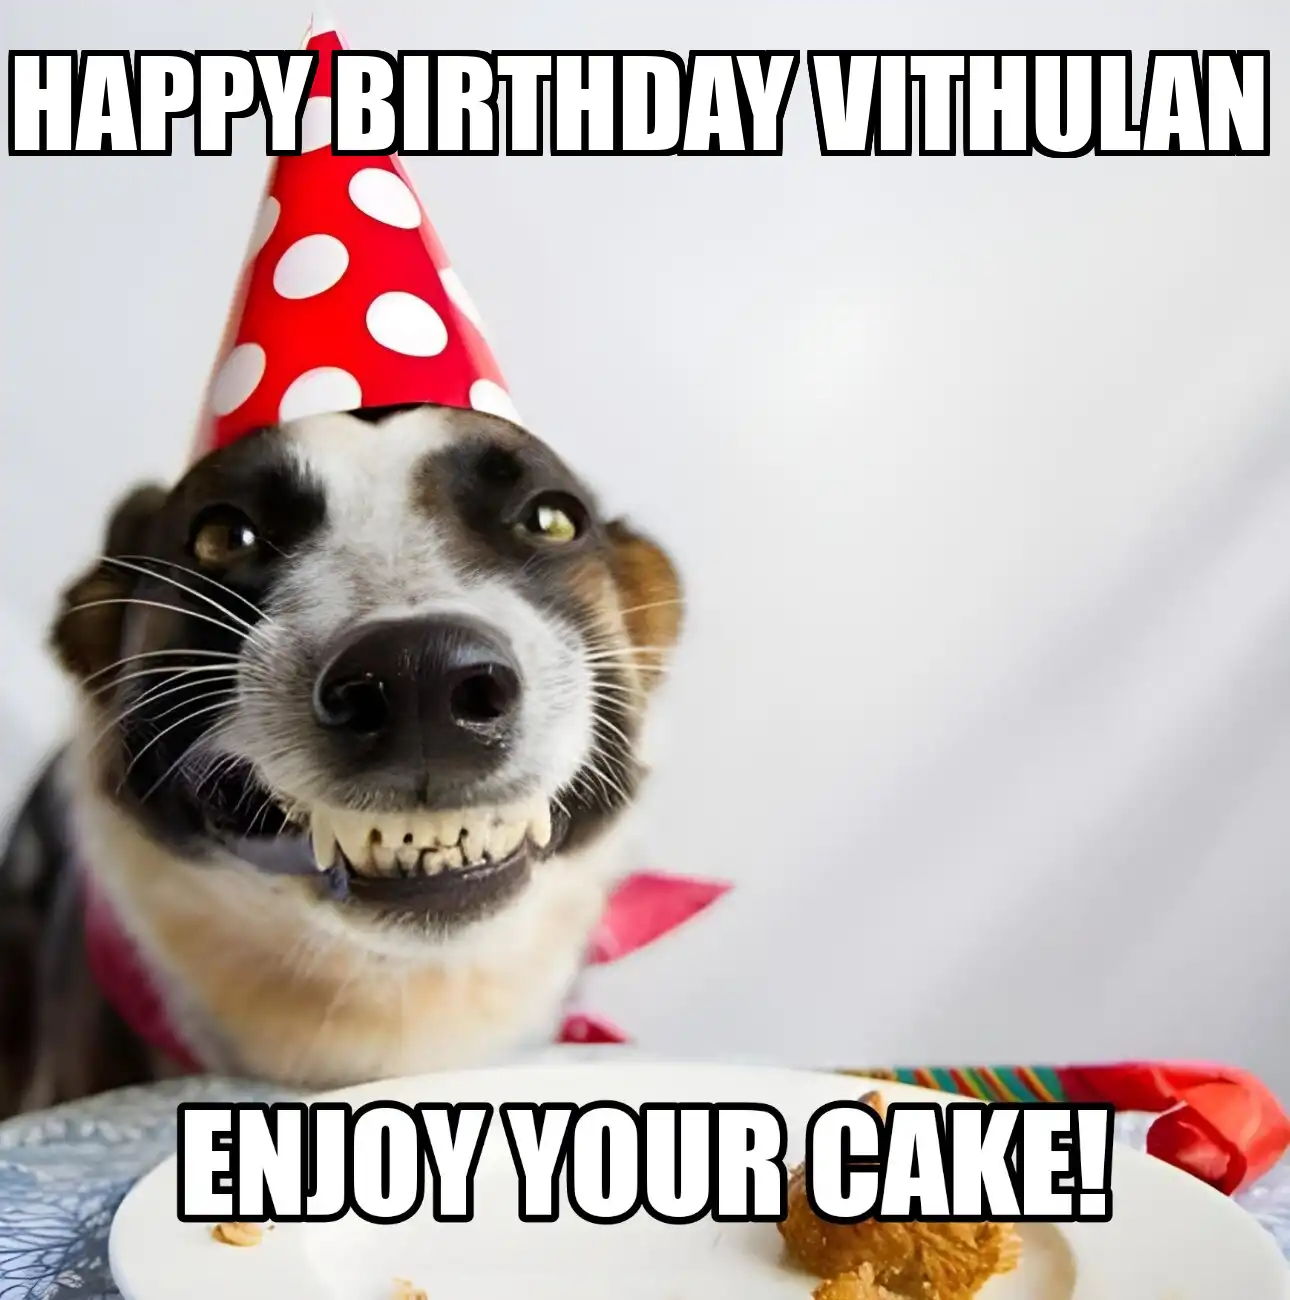 Happy Birthday Vithulan Enjoy Your Cake Dog Meme